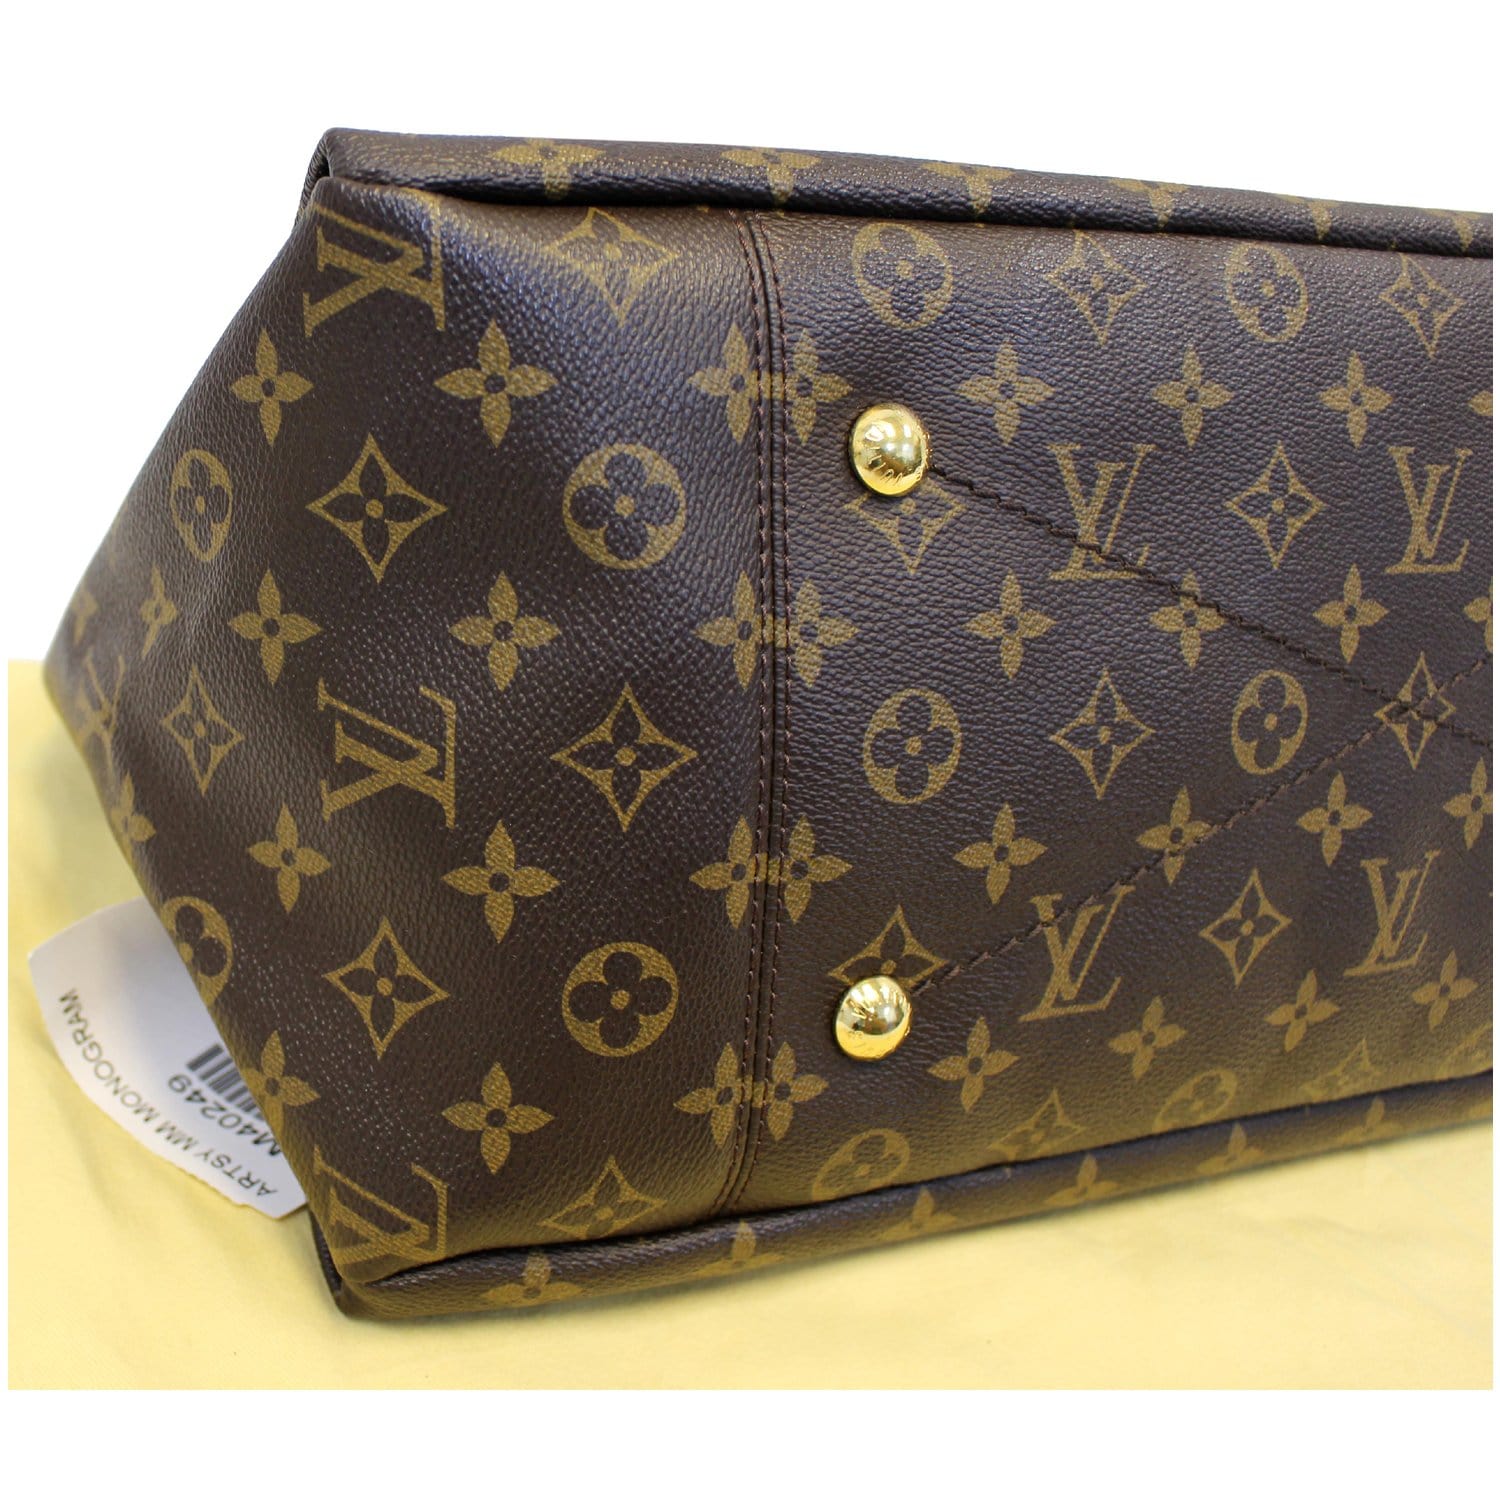 Louis Vuitton Artsy MM Monogram Shoulder Bag For Women